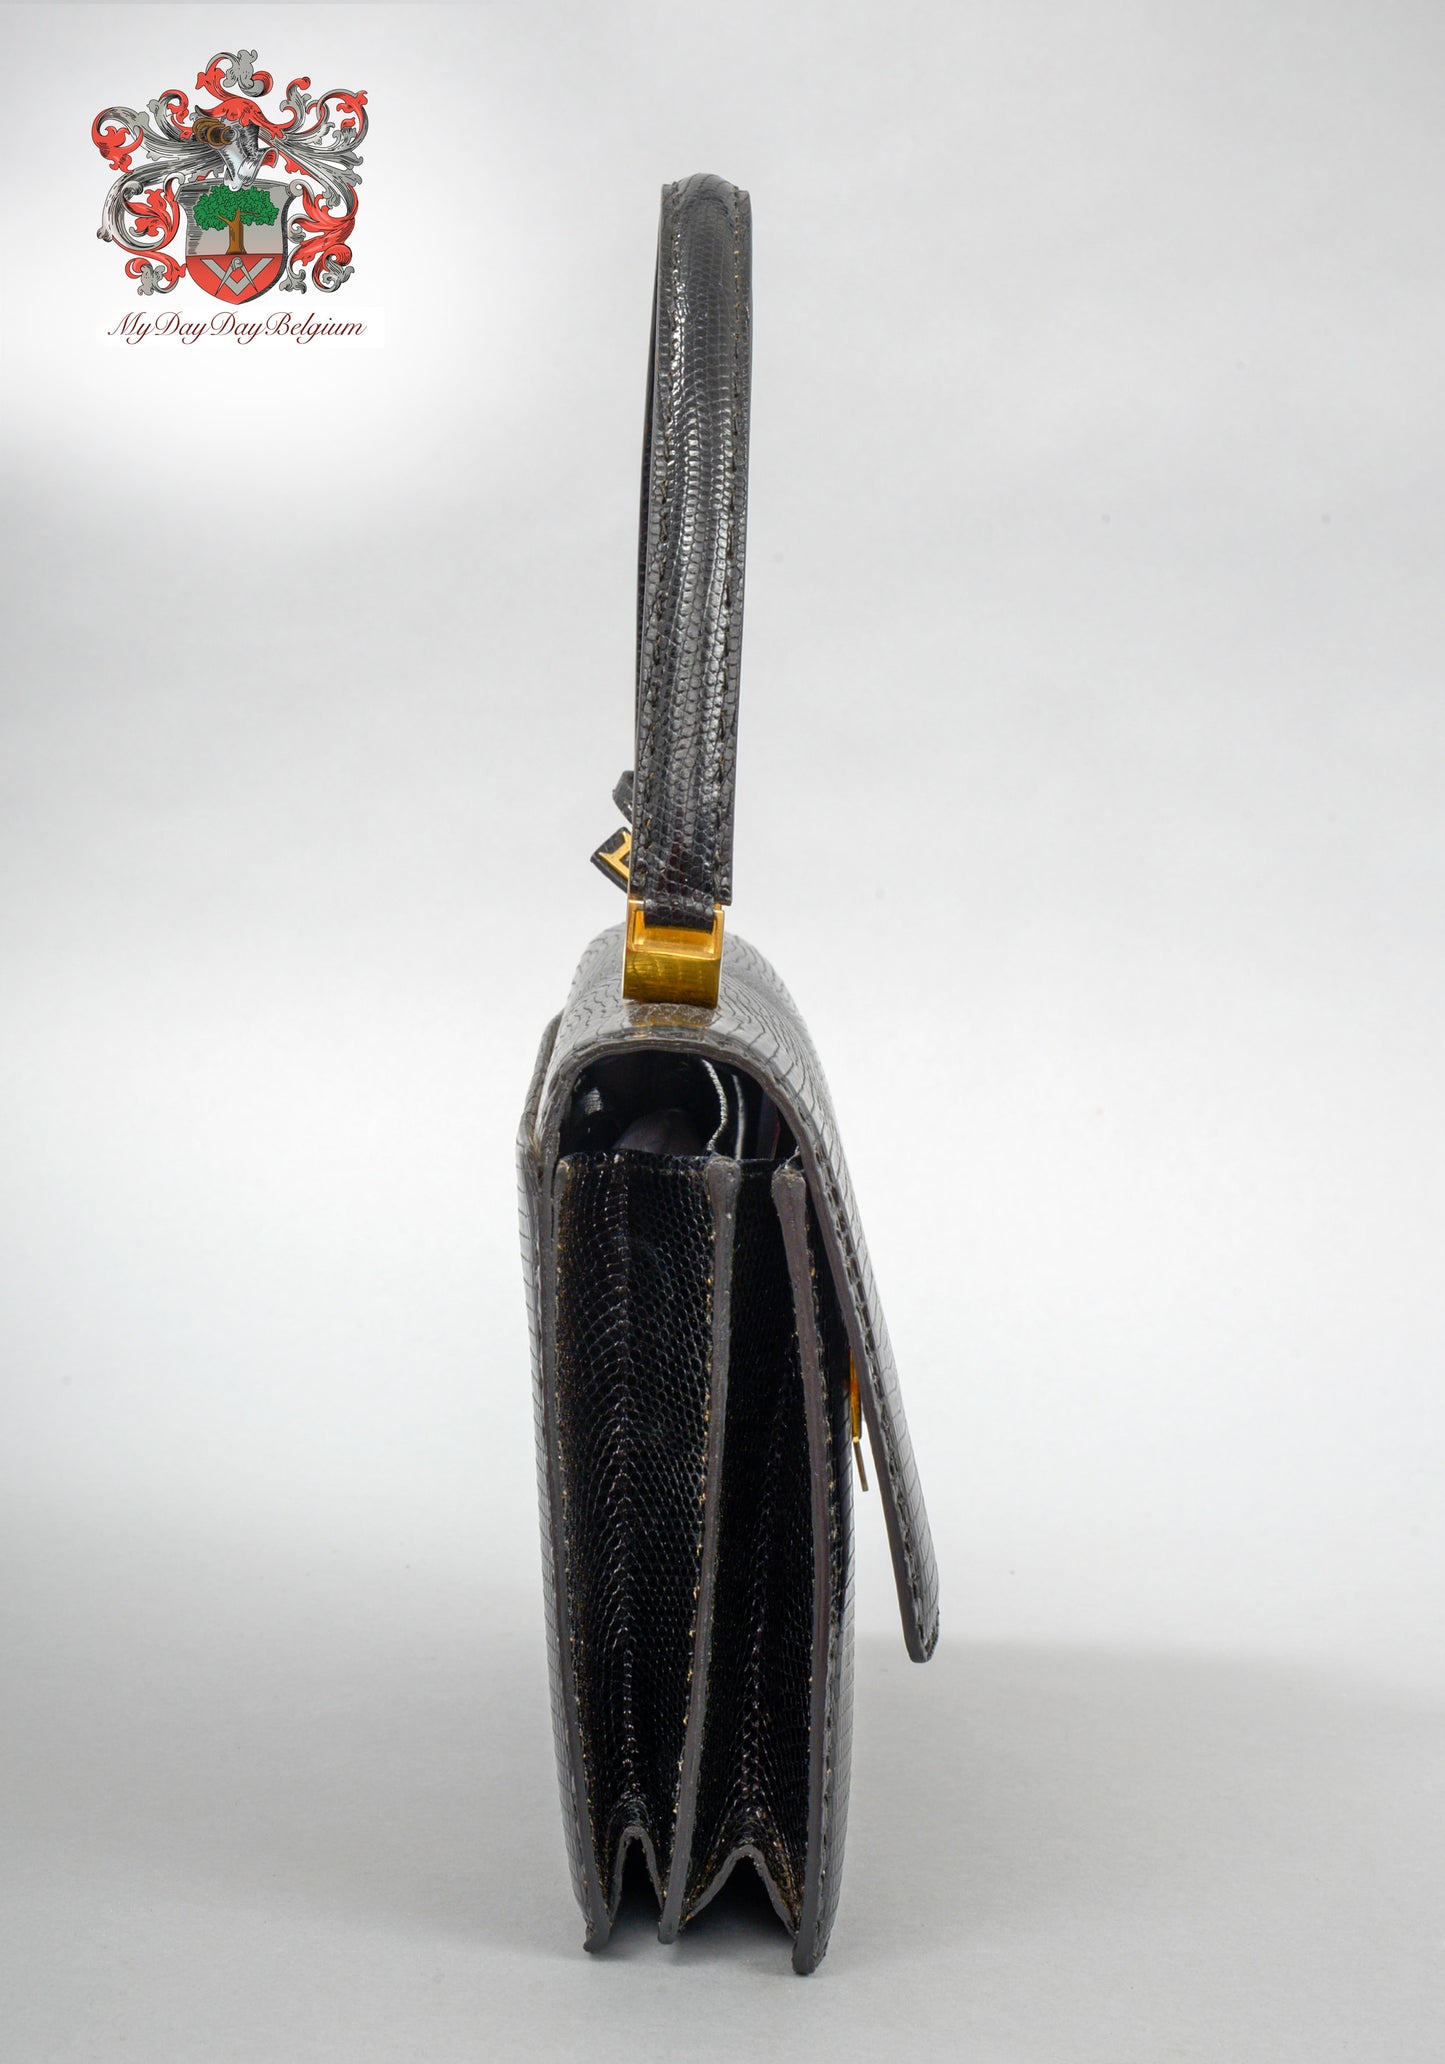 Delvaux vintage top handle handbag in lizard leather 1974